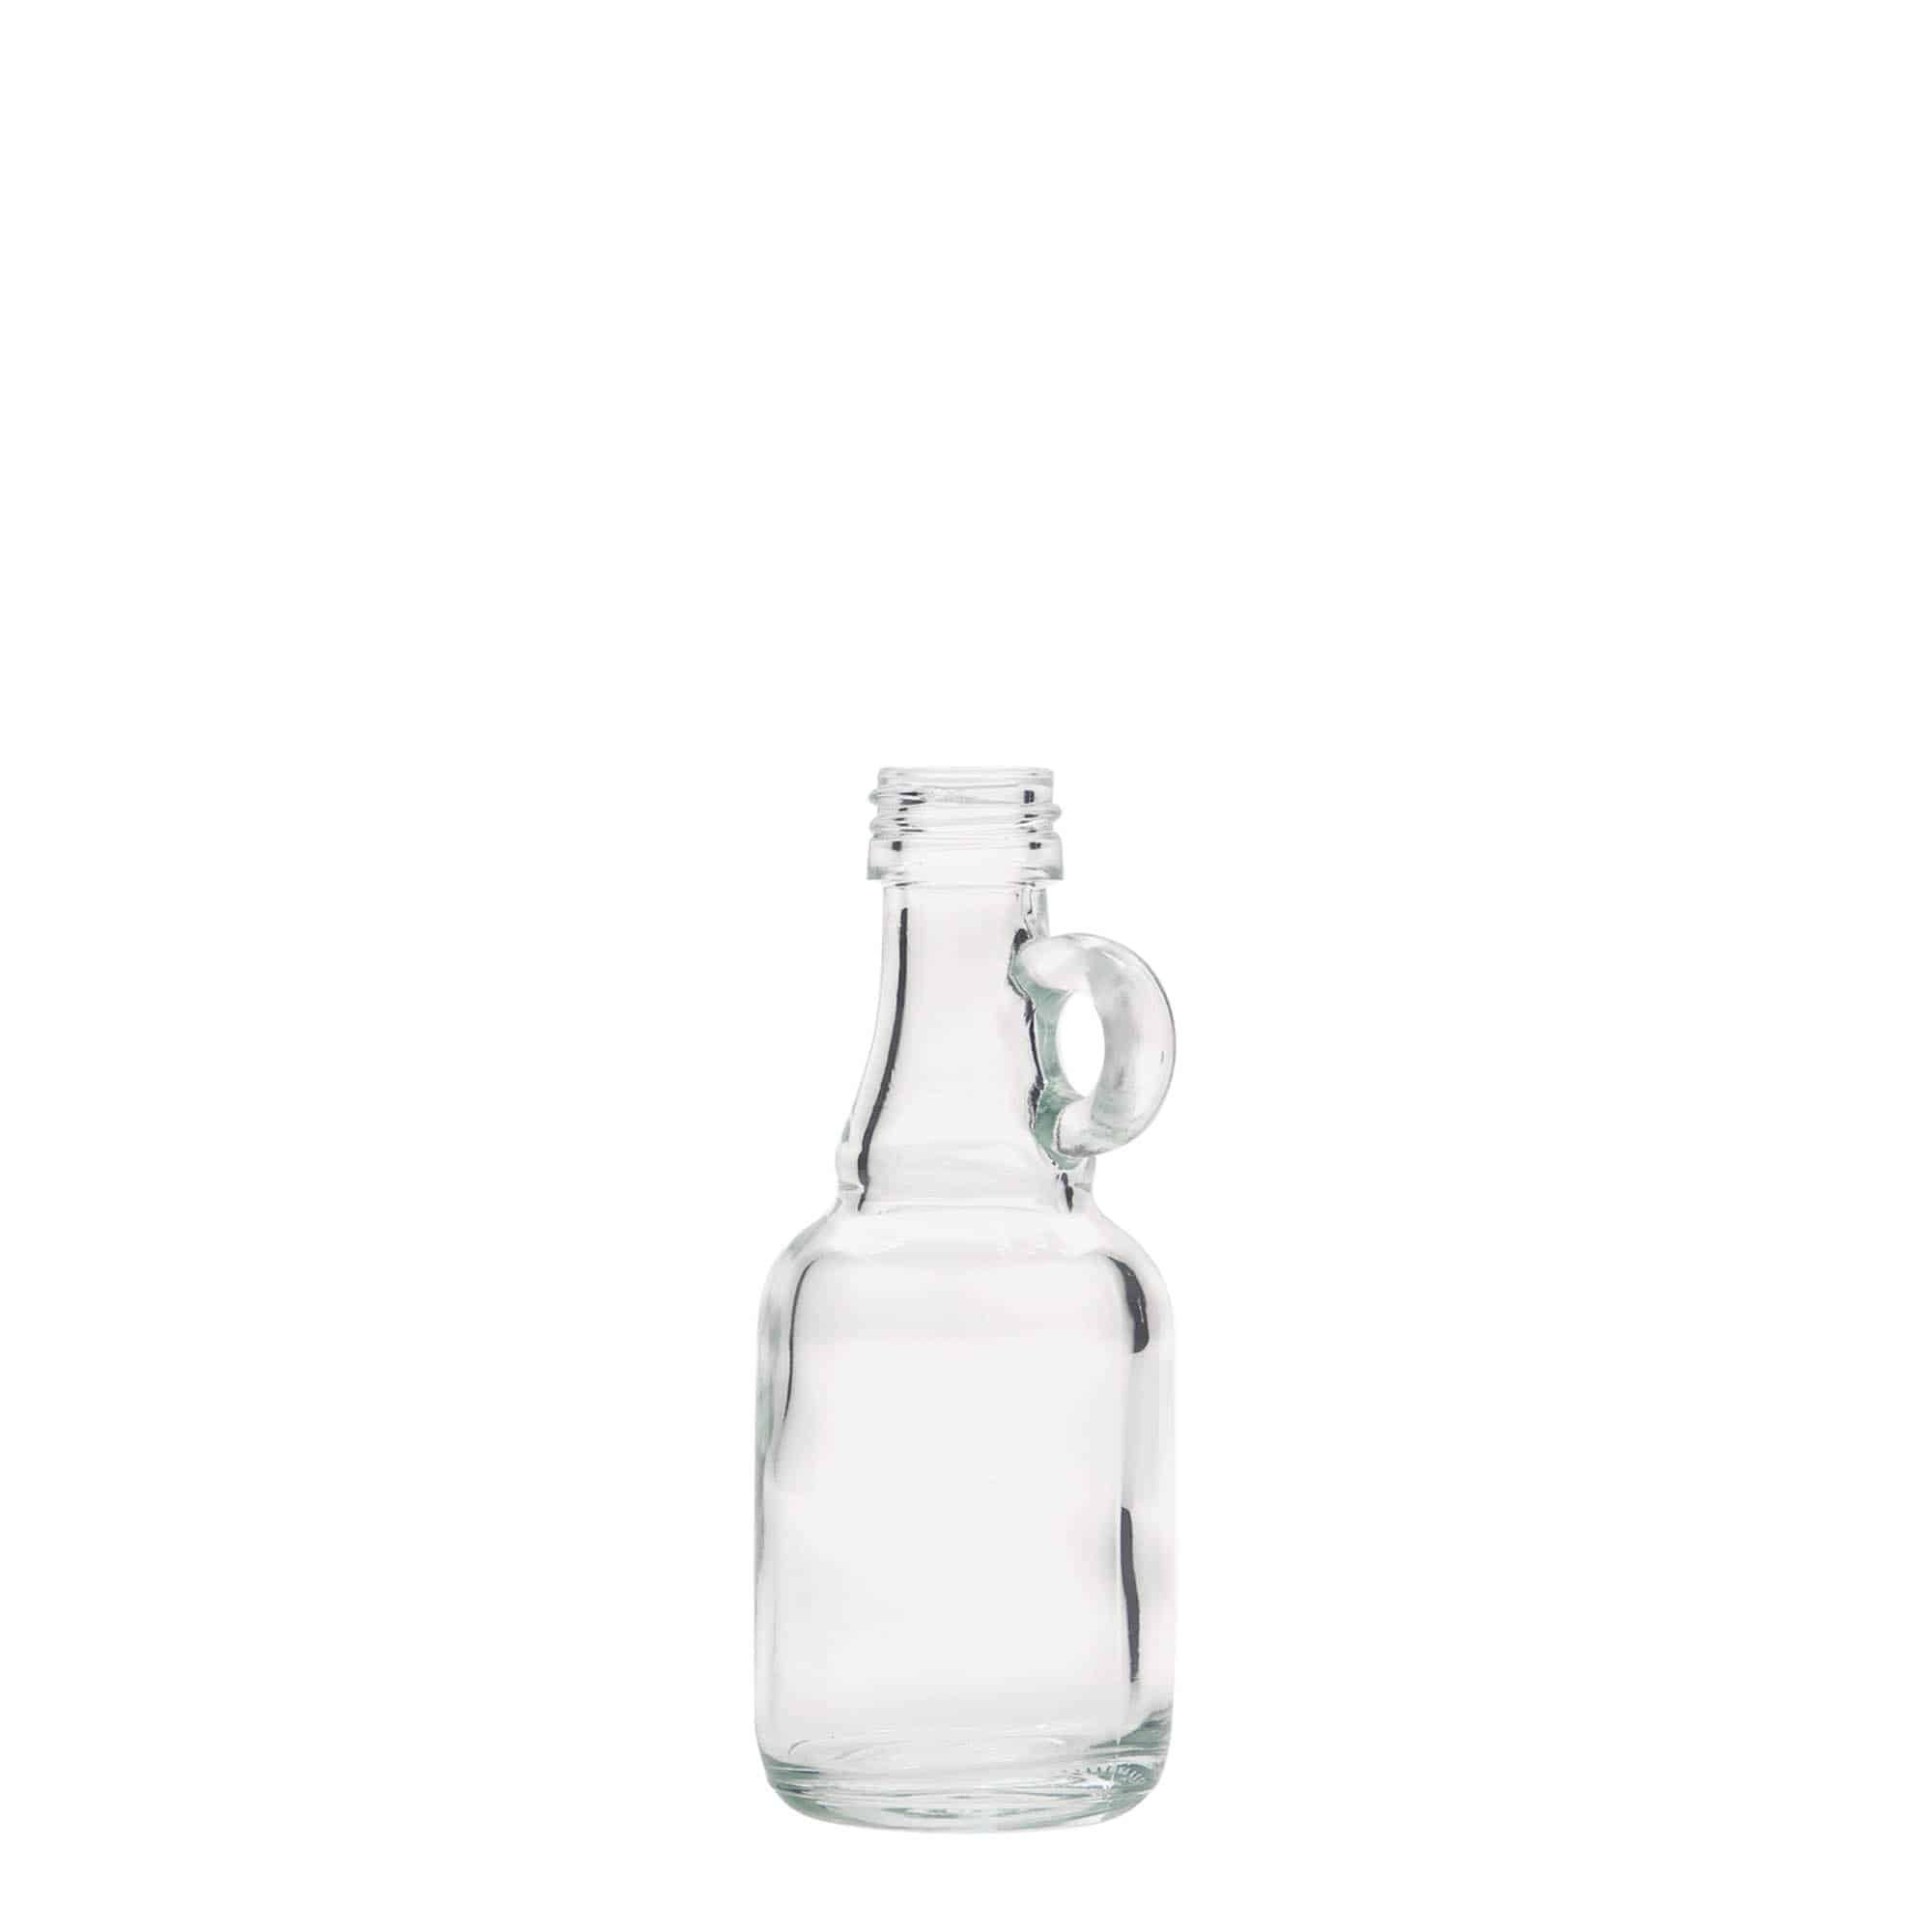 40 ml glass bottle 'Santos', closure: PP 18